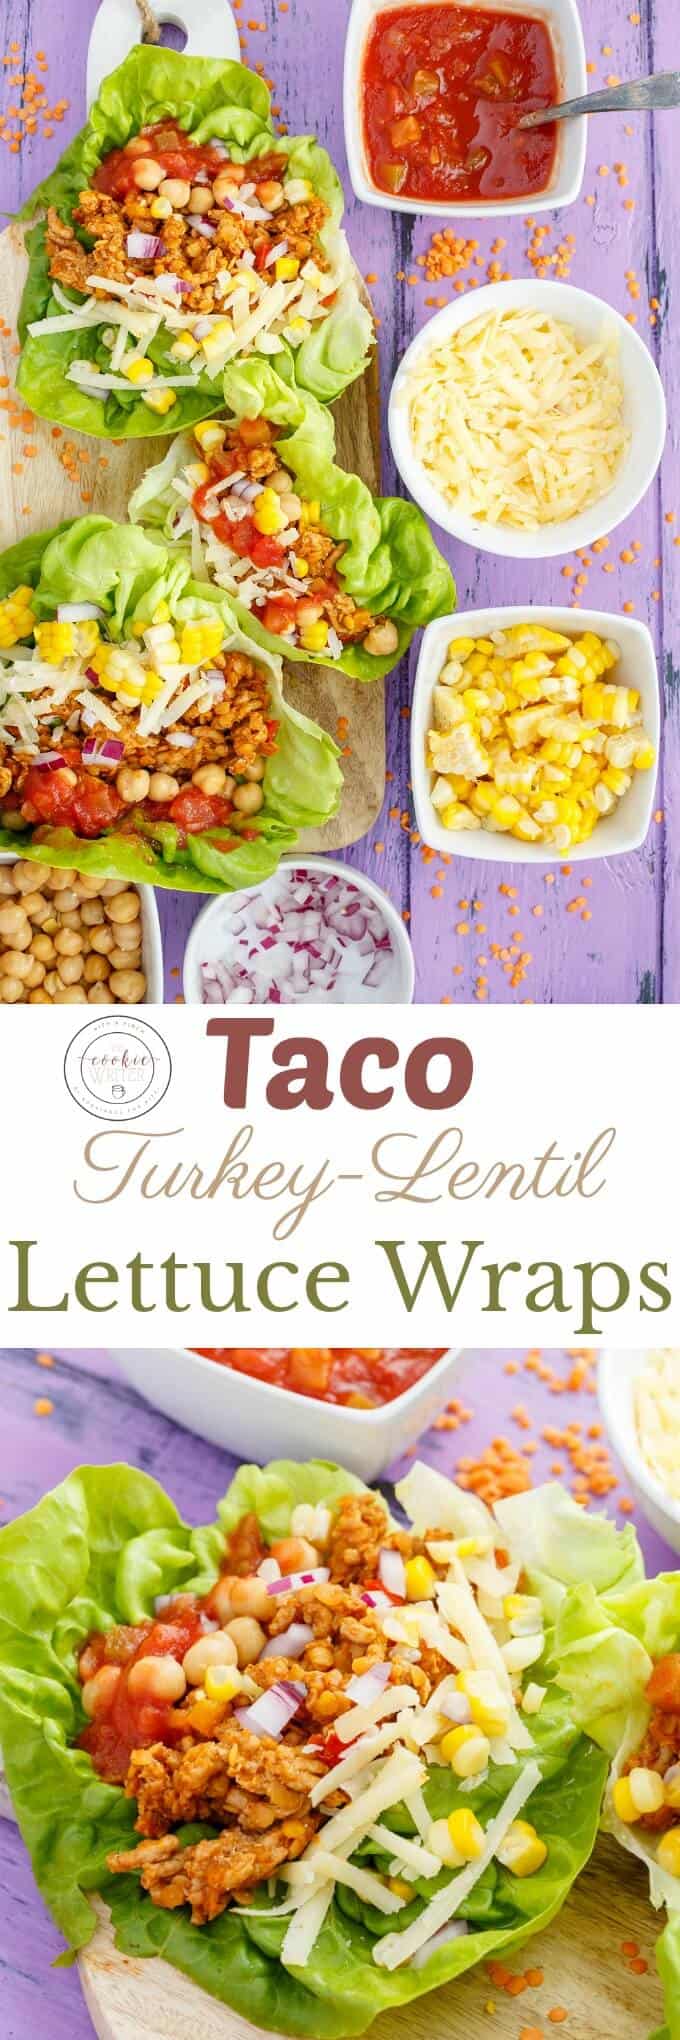 Taco Turkey-Lentil Lettuce Wraps